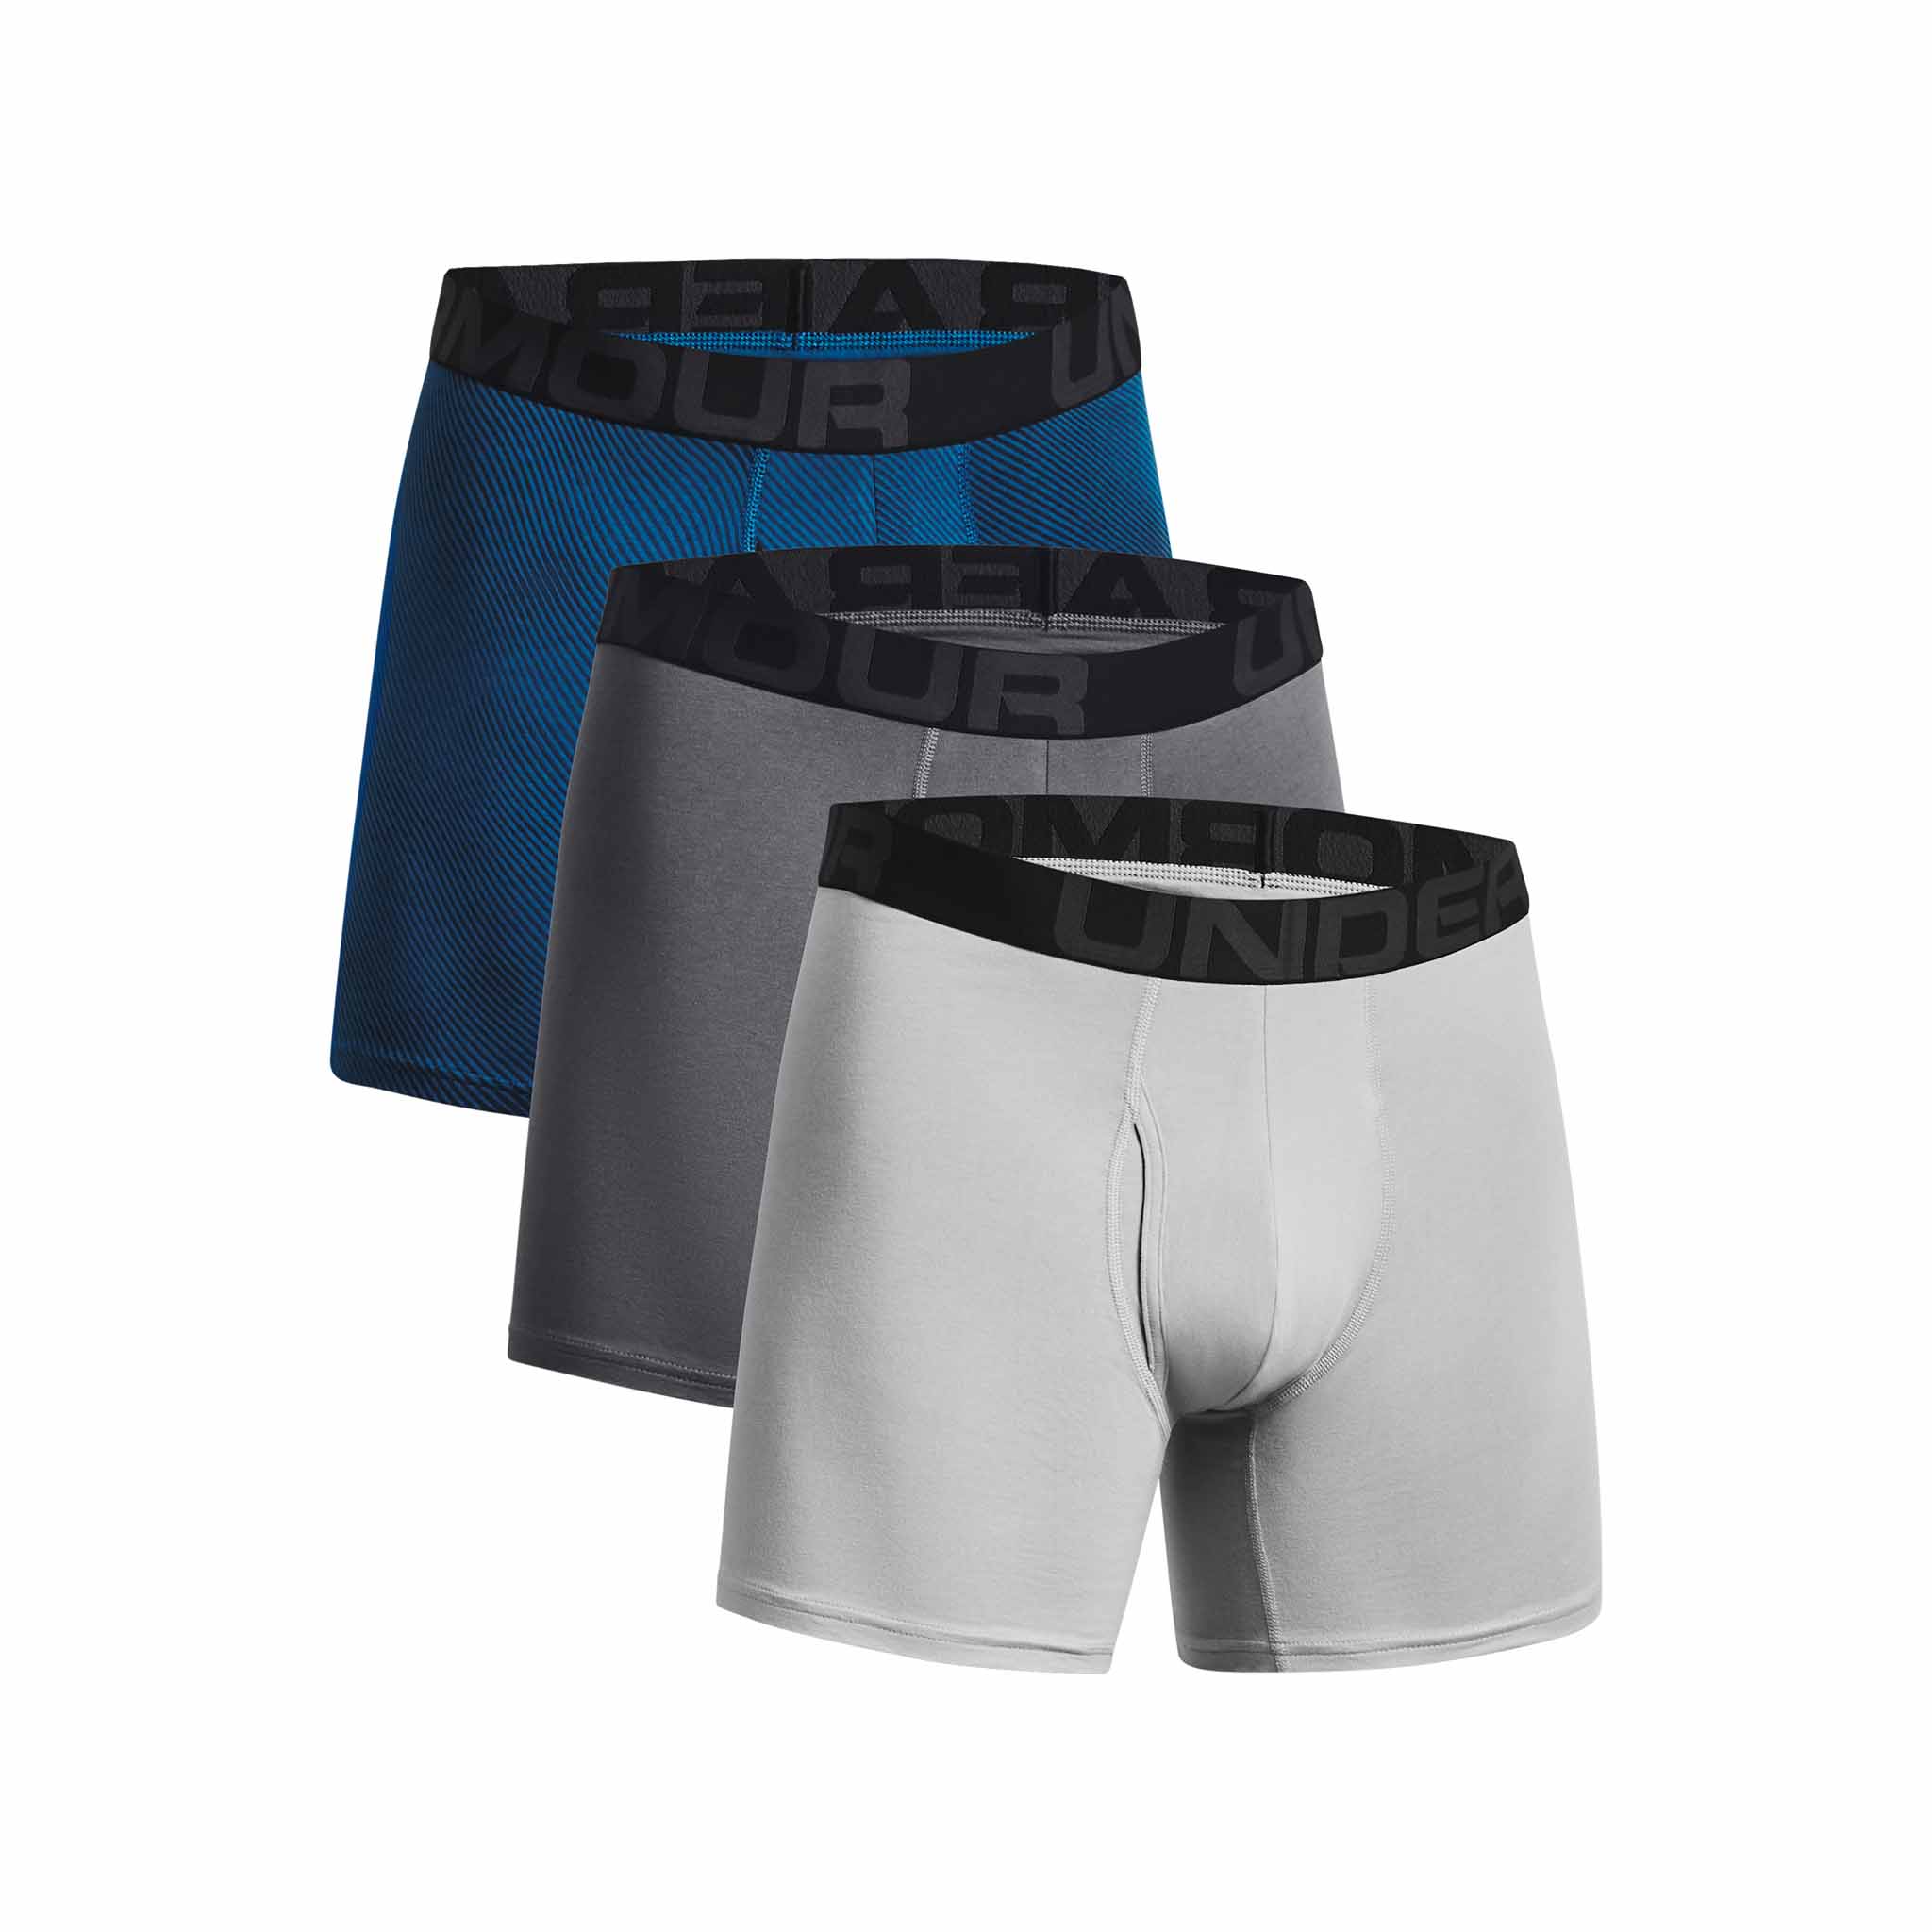 Under Armour Men's Boxer Briefs 3 Pack 6 Boxerjock Athletic Training  Underwear, Black, XL 